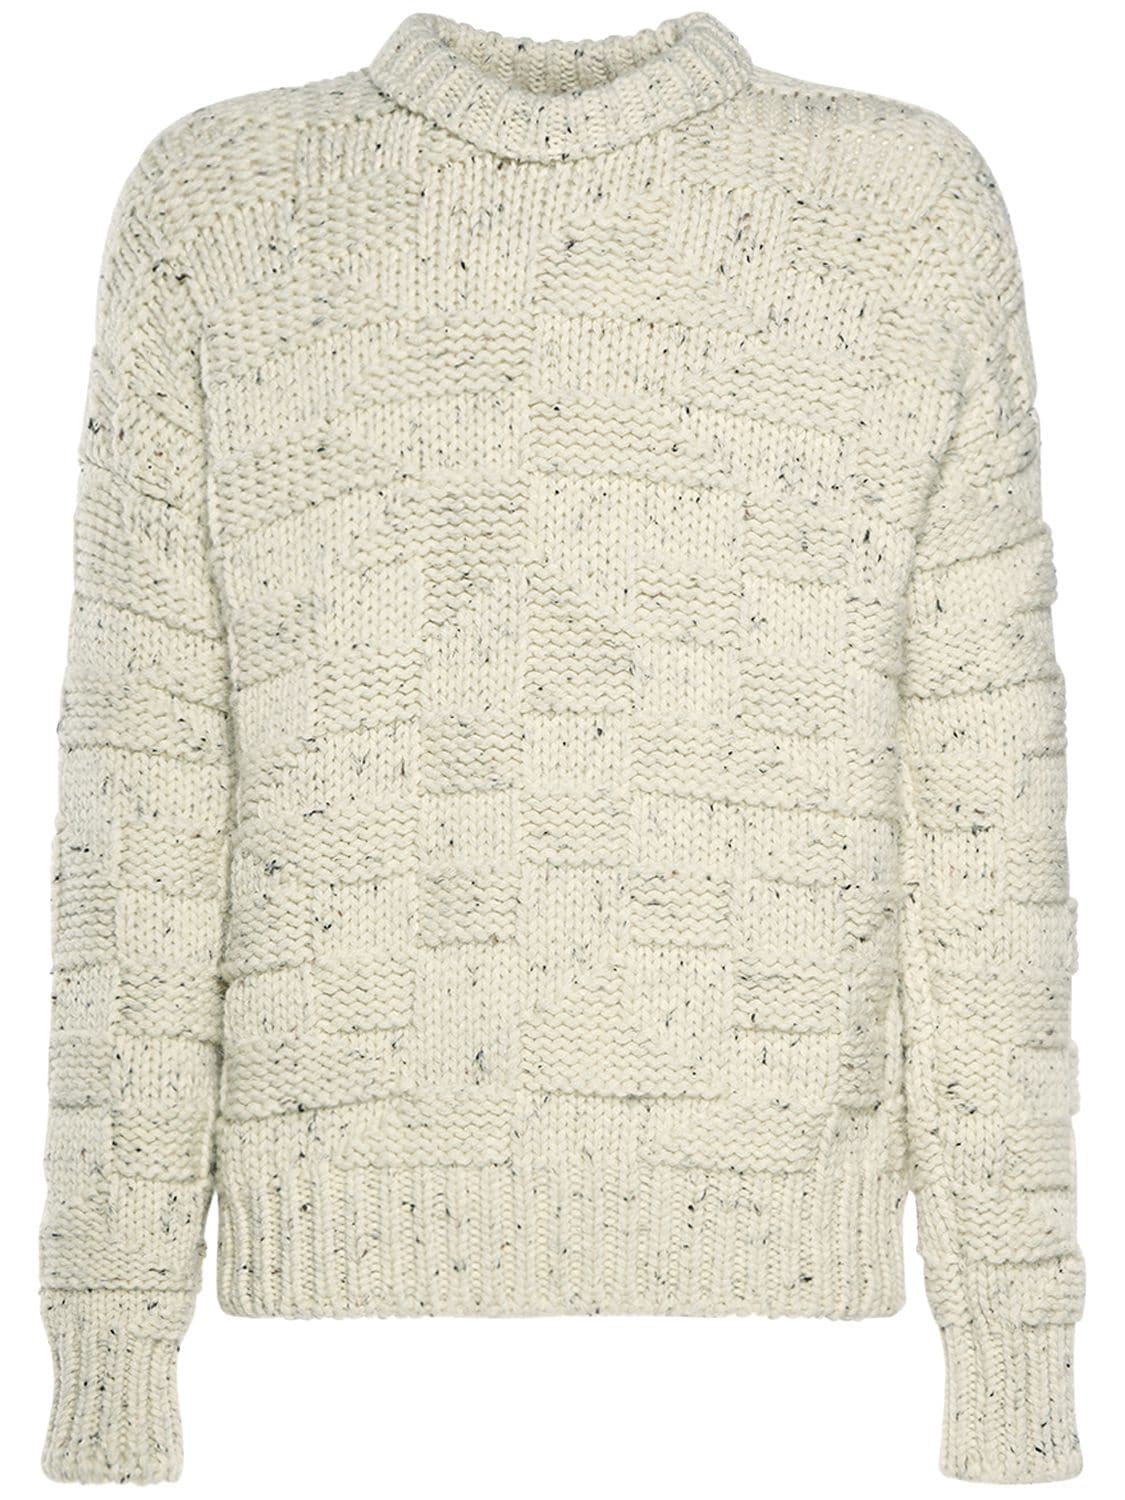 Image of Intreccio Graphic Shetland Wool Sweater